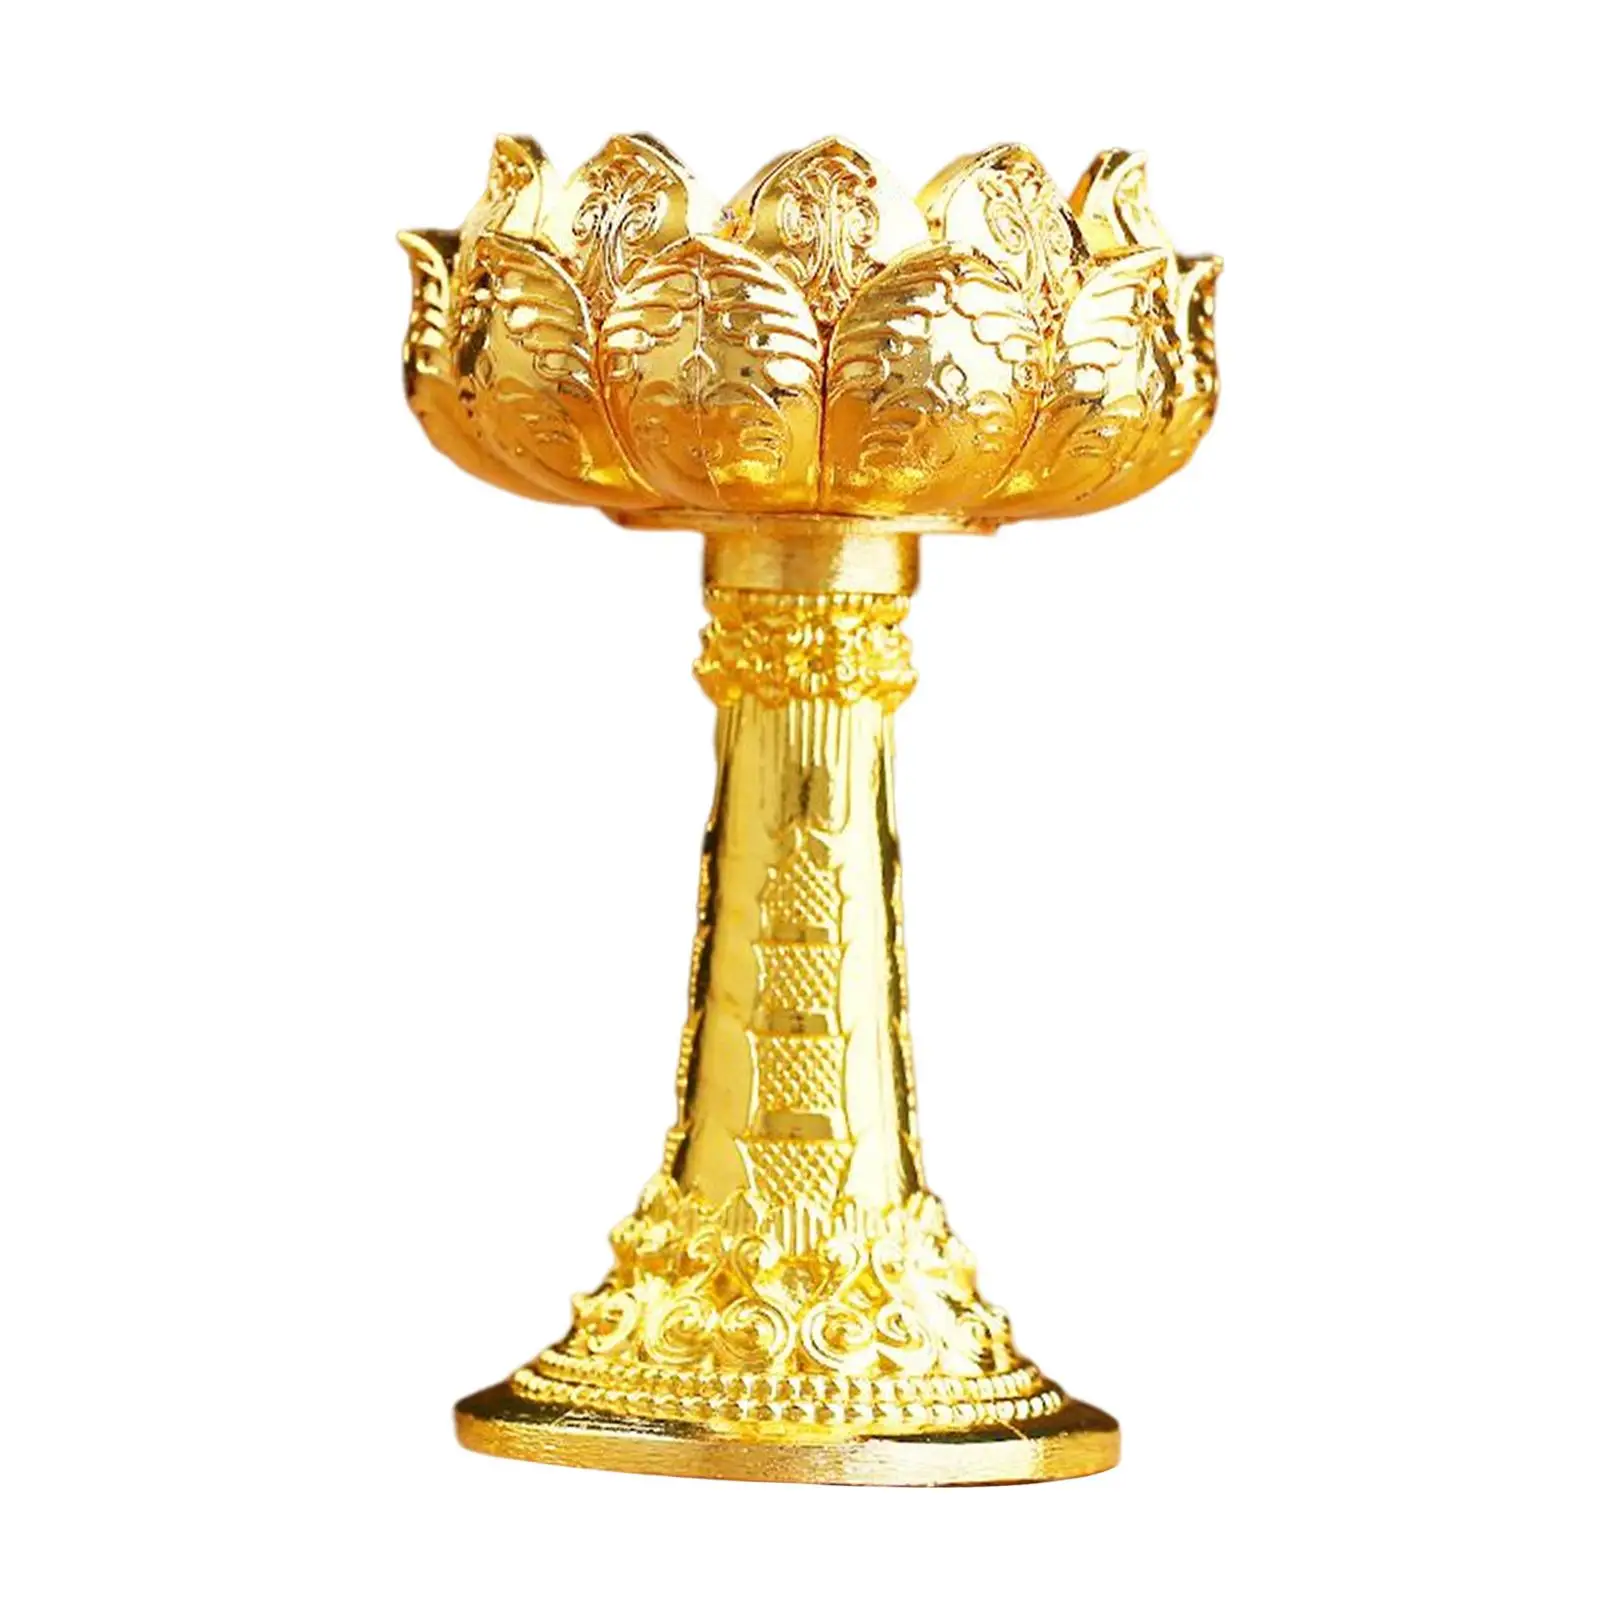 Lotus Ghee Lamp Holder Candle Holder Buddhist Supplies Meditation Tibetan Butter Lamp Holder for Table Centerpiece Decor Gift